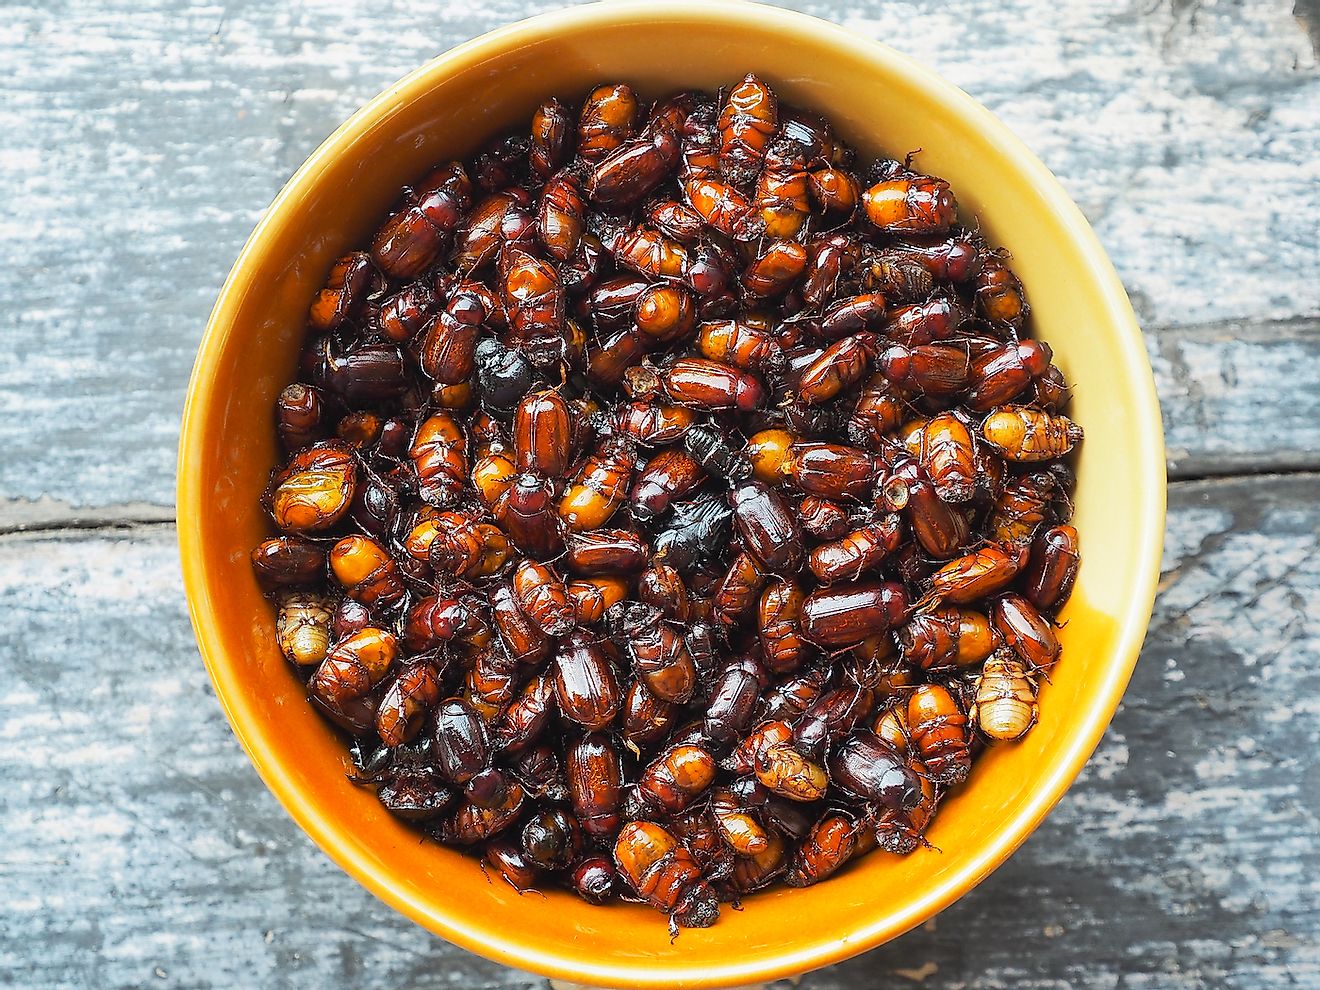 A bowl of deep fried and crispy Ruby roast beetle. Image credit: Eakarat Jugmai/Shutterstock.com